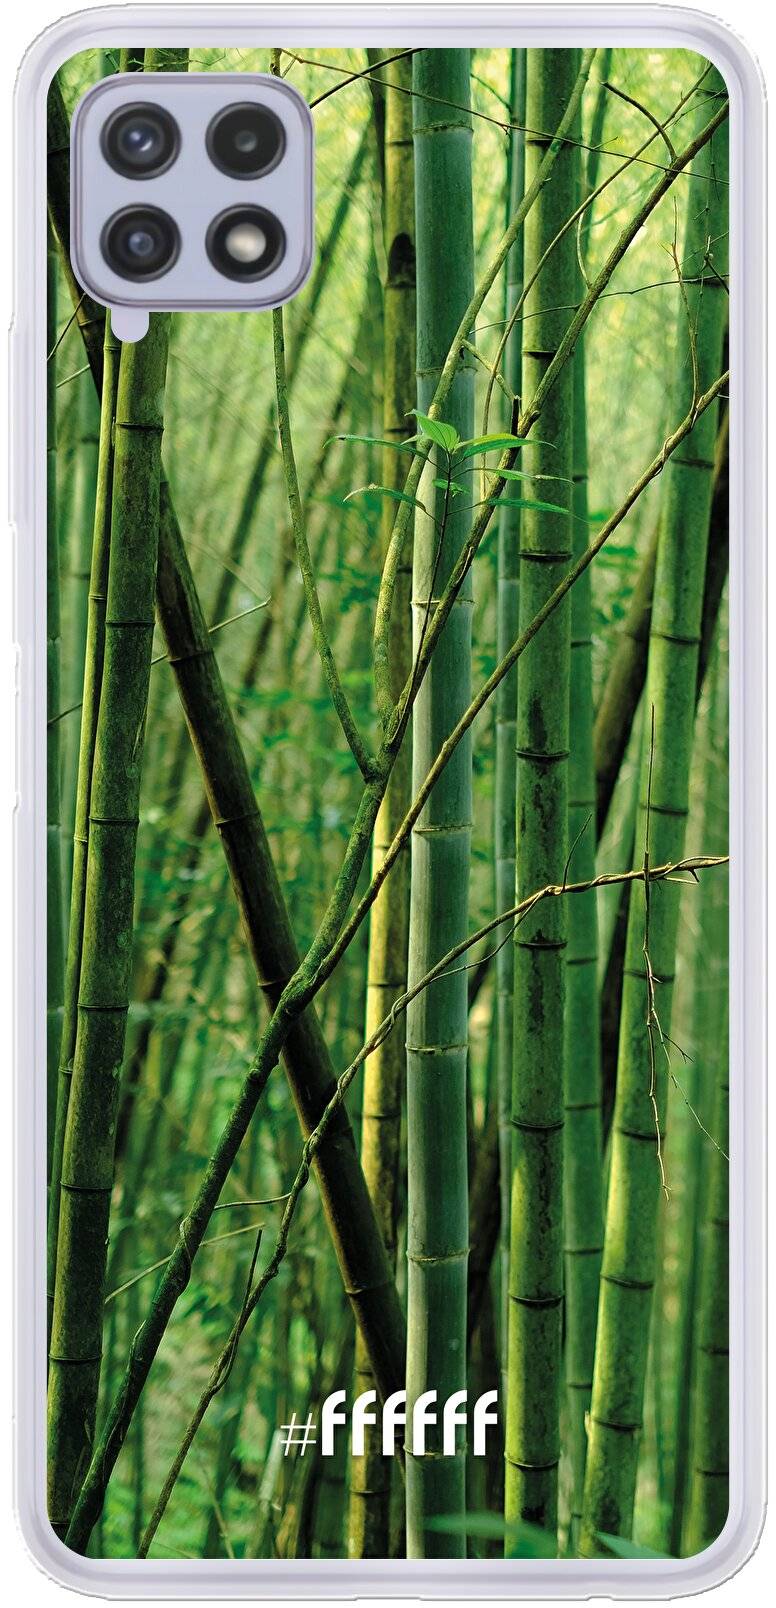 Bamboo Galaxy A22 4G